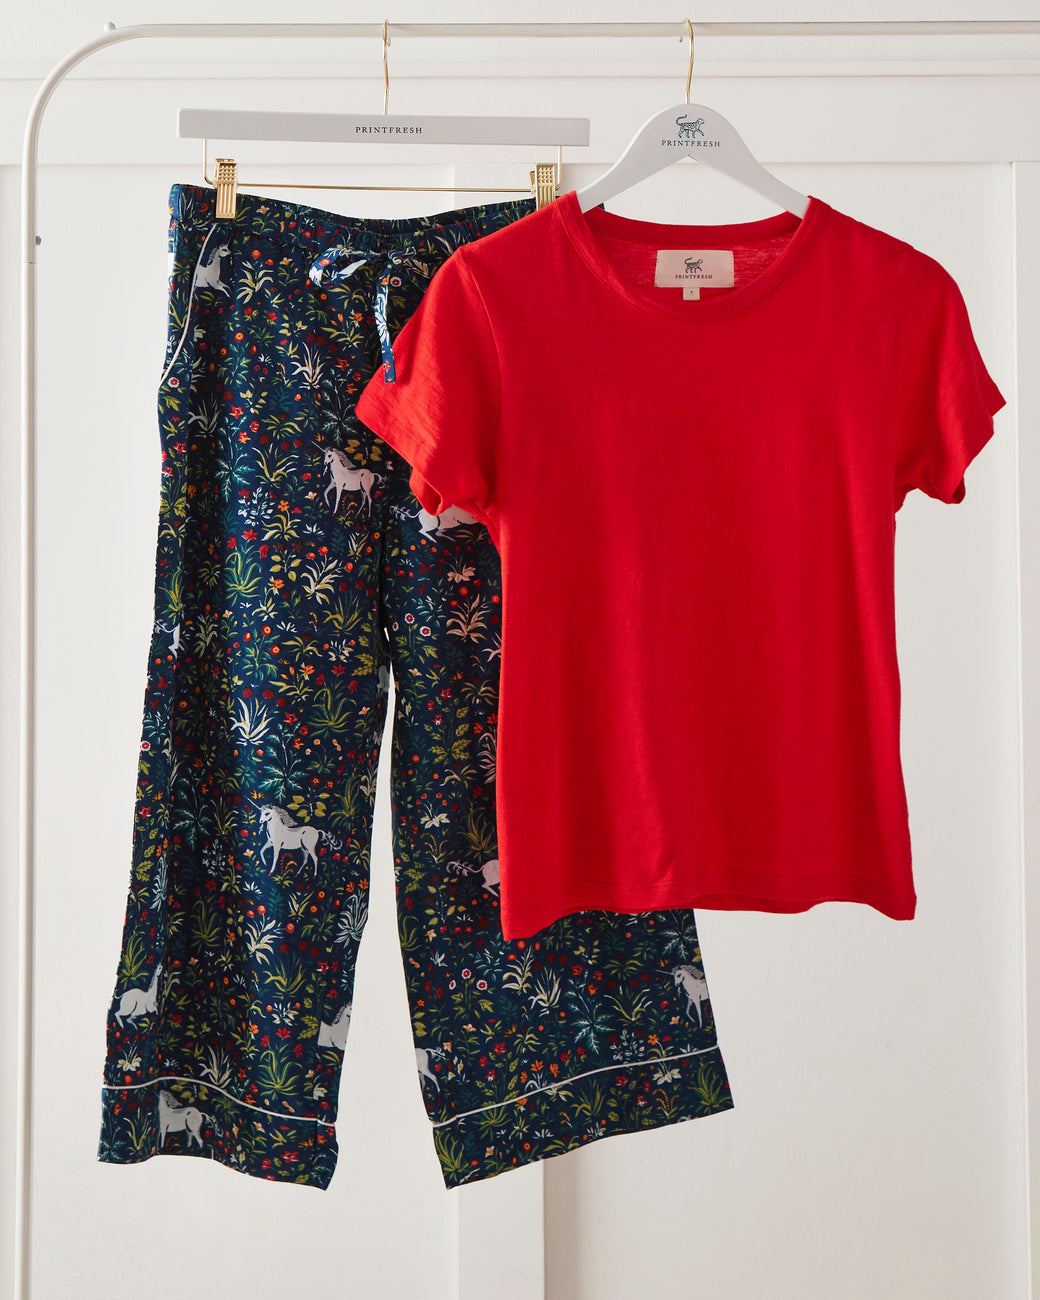 Unicorn's Garden - T-Shirt and Cropped Pants Bundle - Indigo/Red Lip - Printfresh